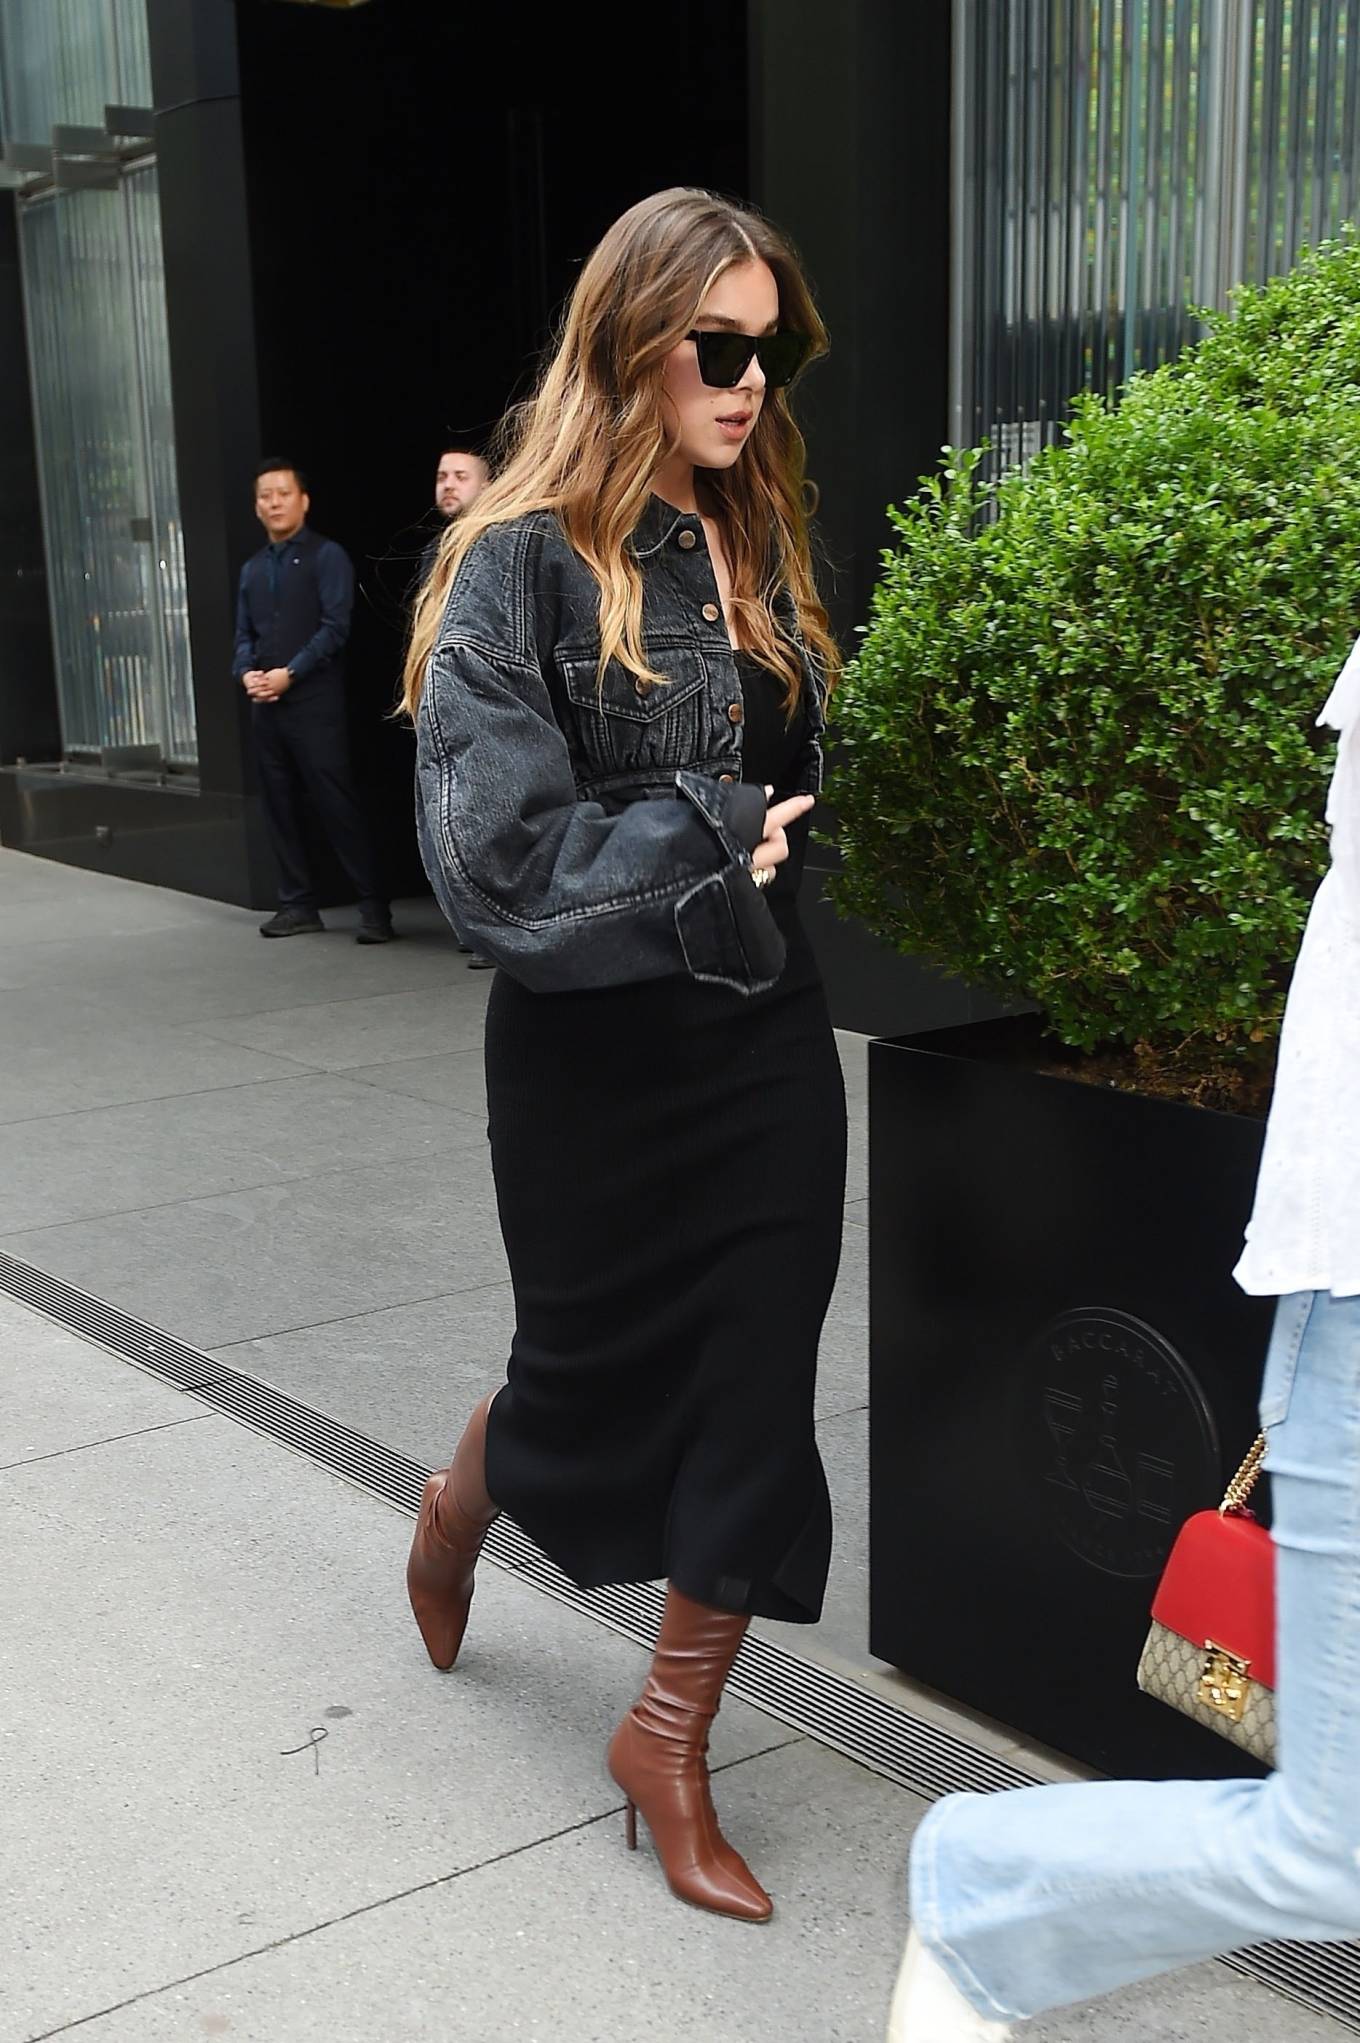 Hailee Steinfeld - In a black denim jacket promoting her work in New York